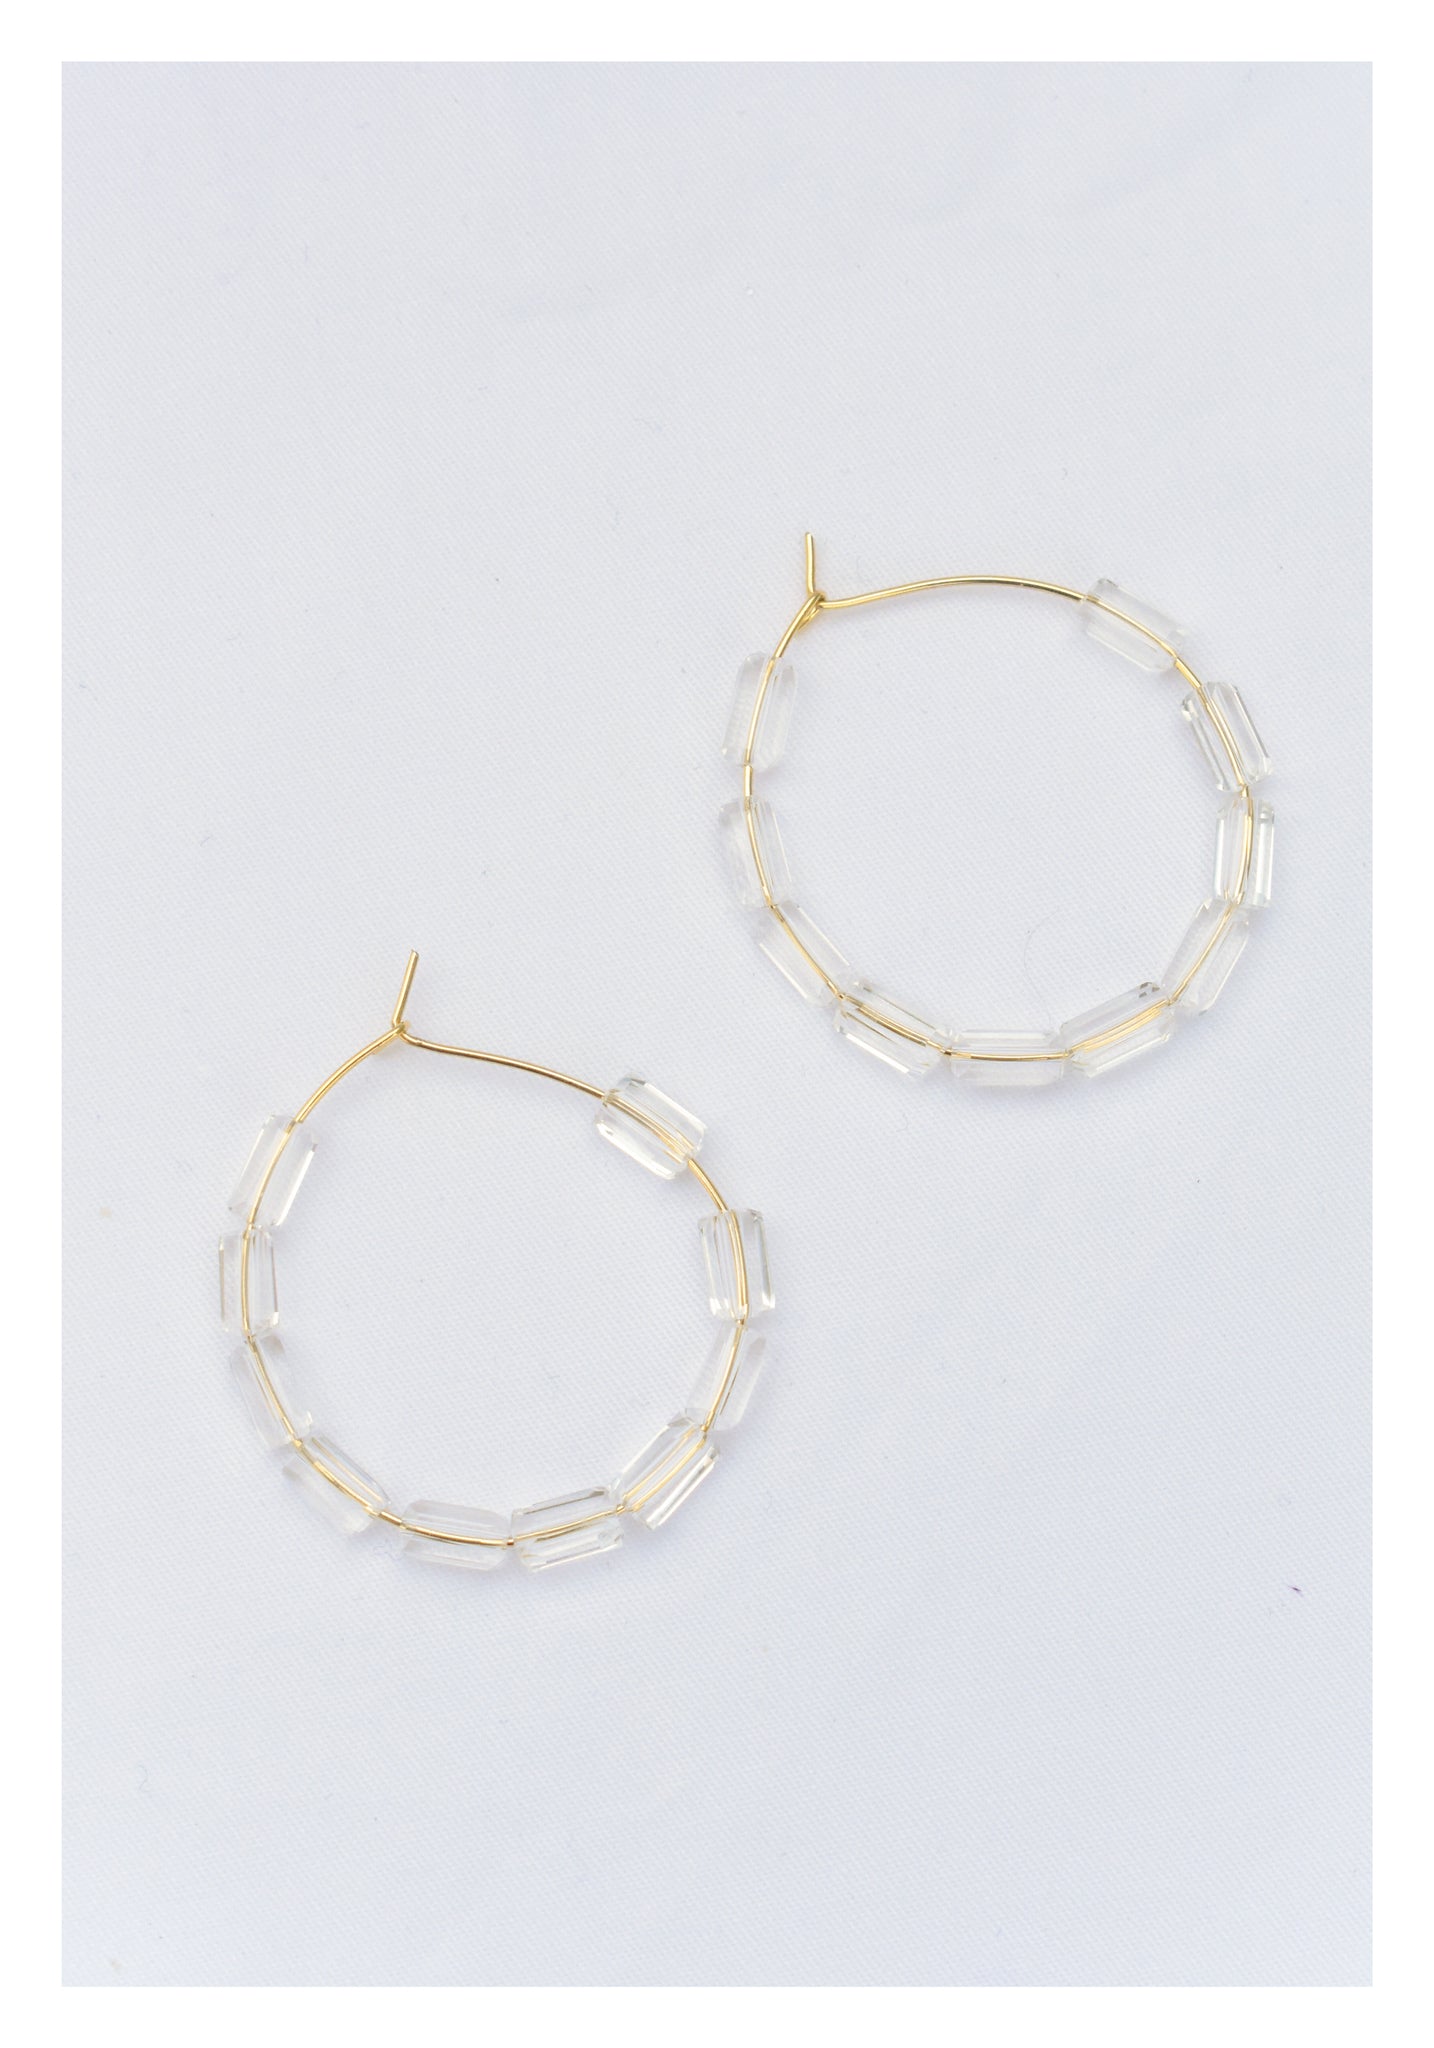 Transparent Long Beads Hoop Earrings Clear - whoami